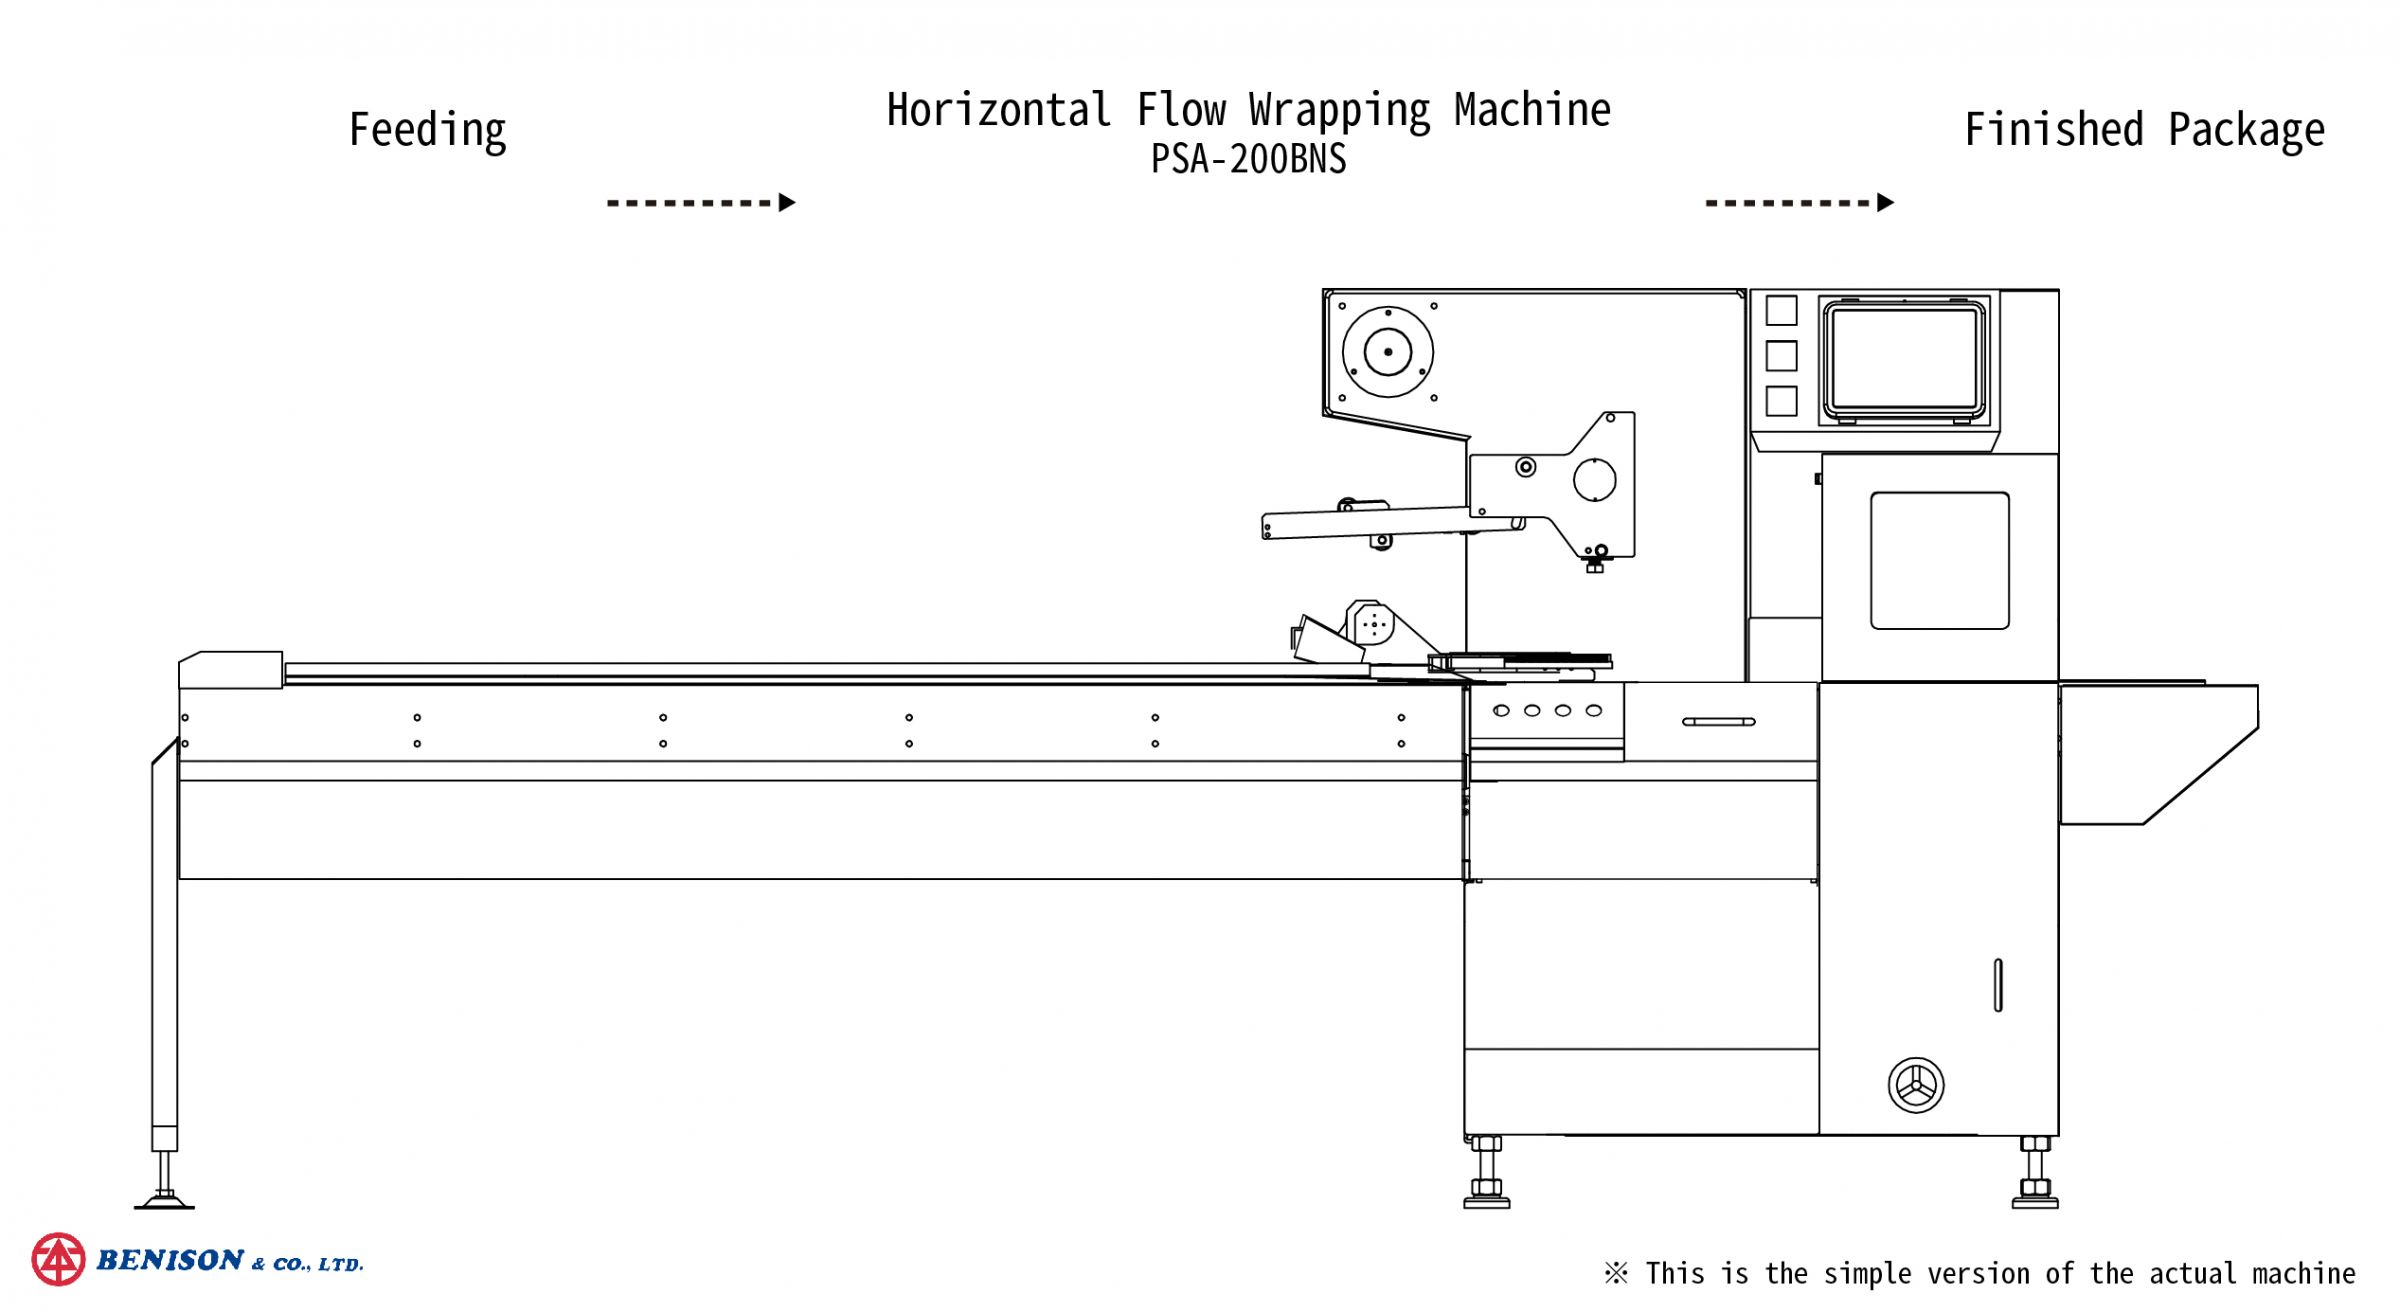 Máquina de envoltura horizontal de flujo, PSA-200BNS para solución de envasado de mascarillas